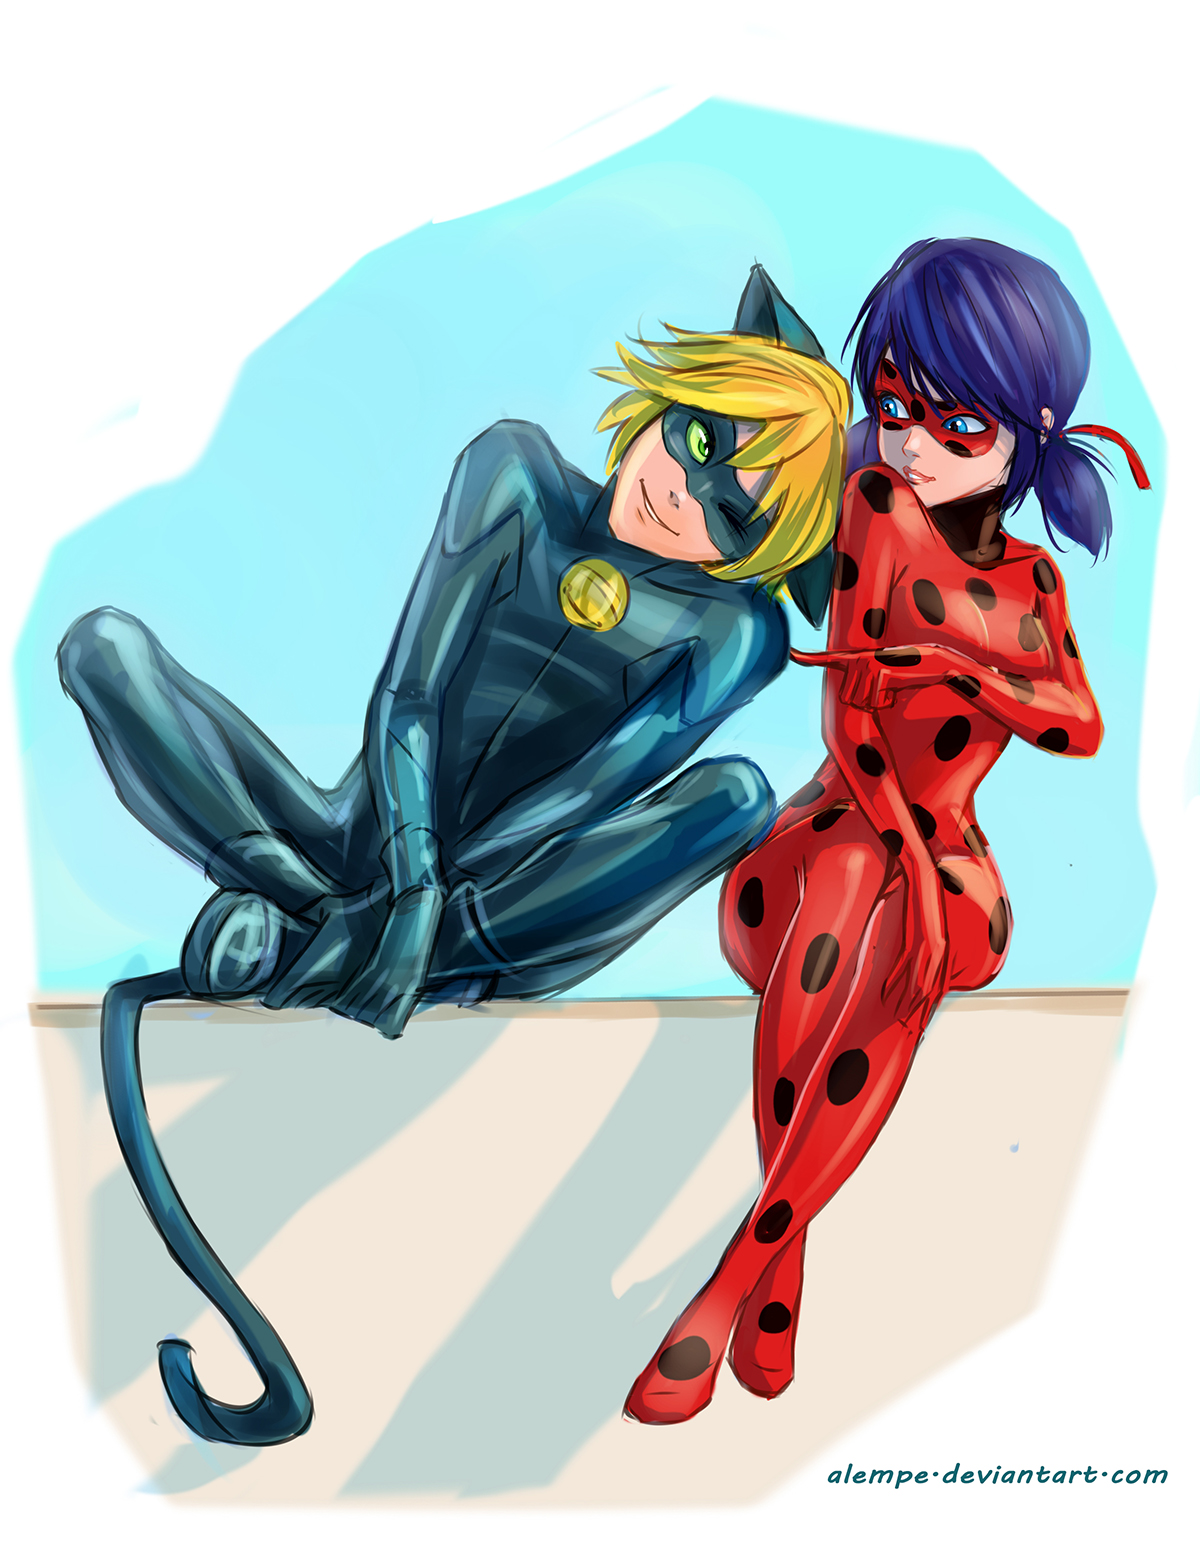 Ladybug and Cat Noir by alempe on DeviantArt